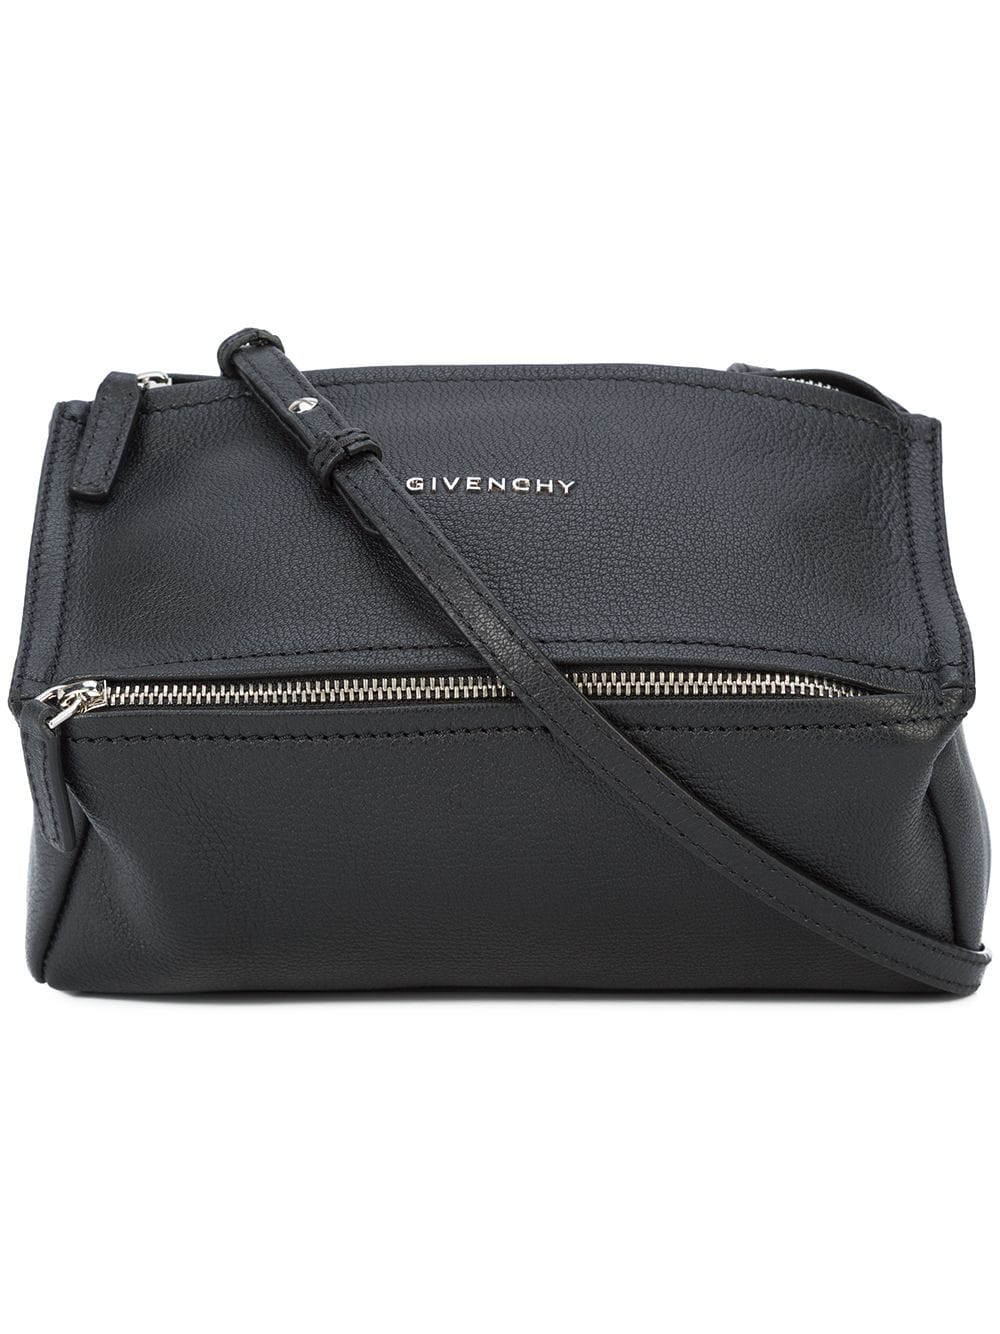 Givenchy black mini Pandora bag for 